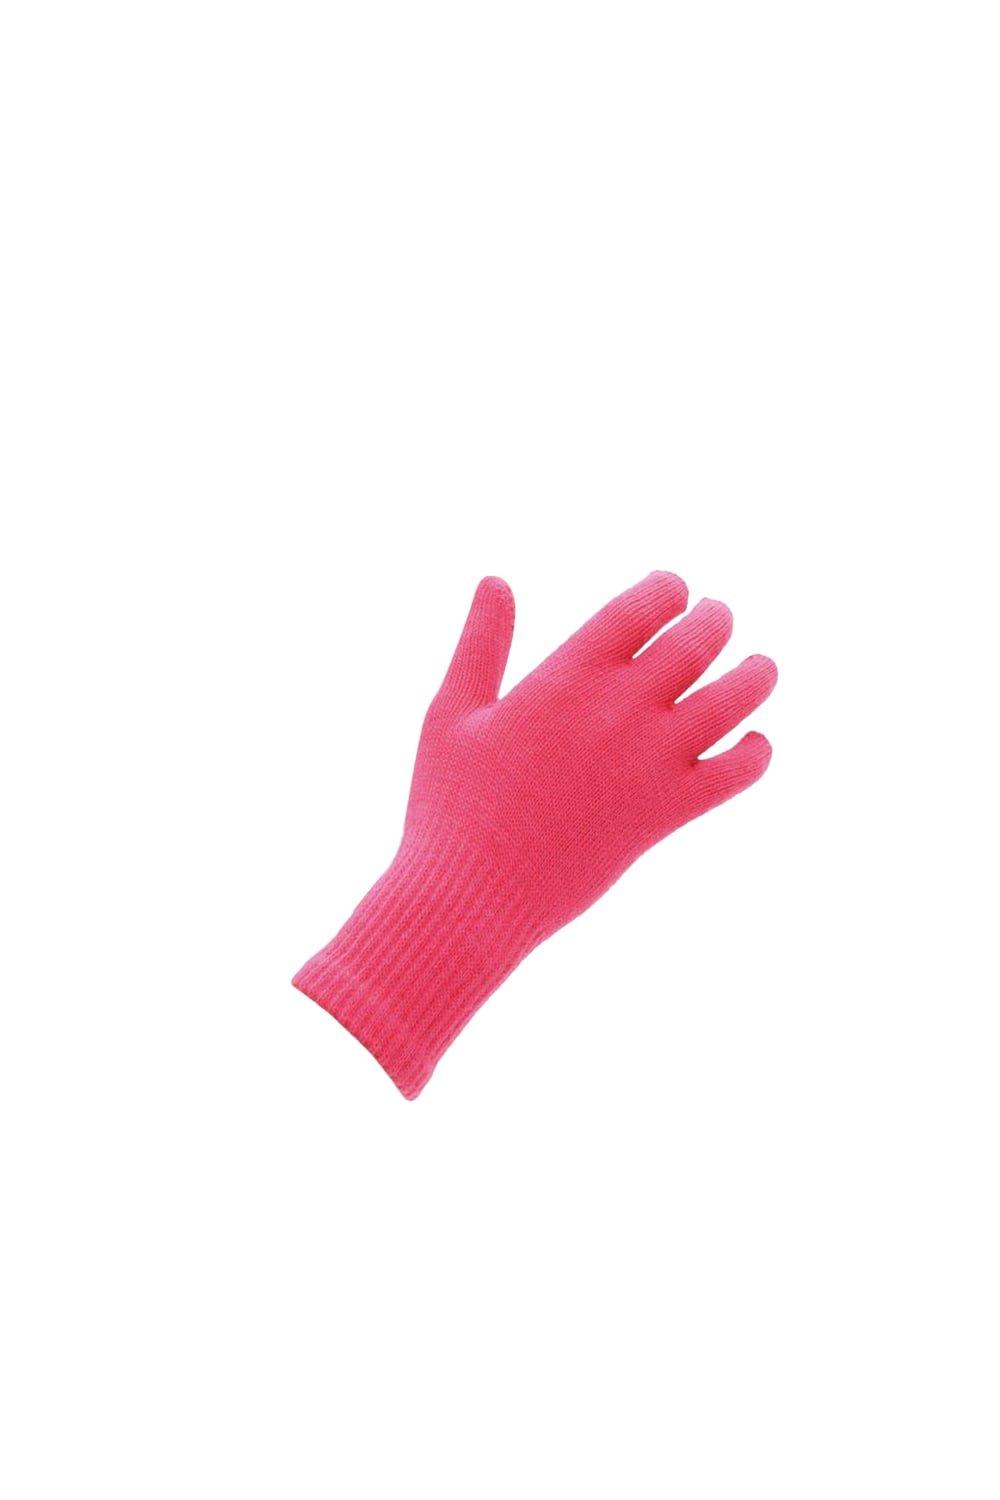 Shires Suregrip Riding Gloves|pink